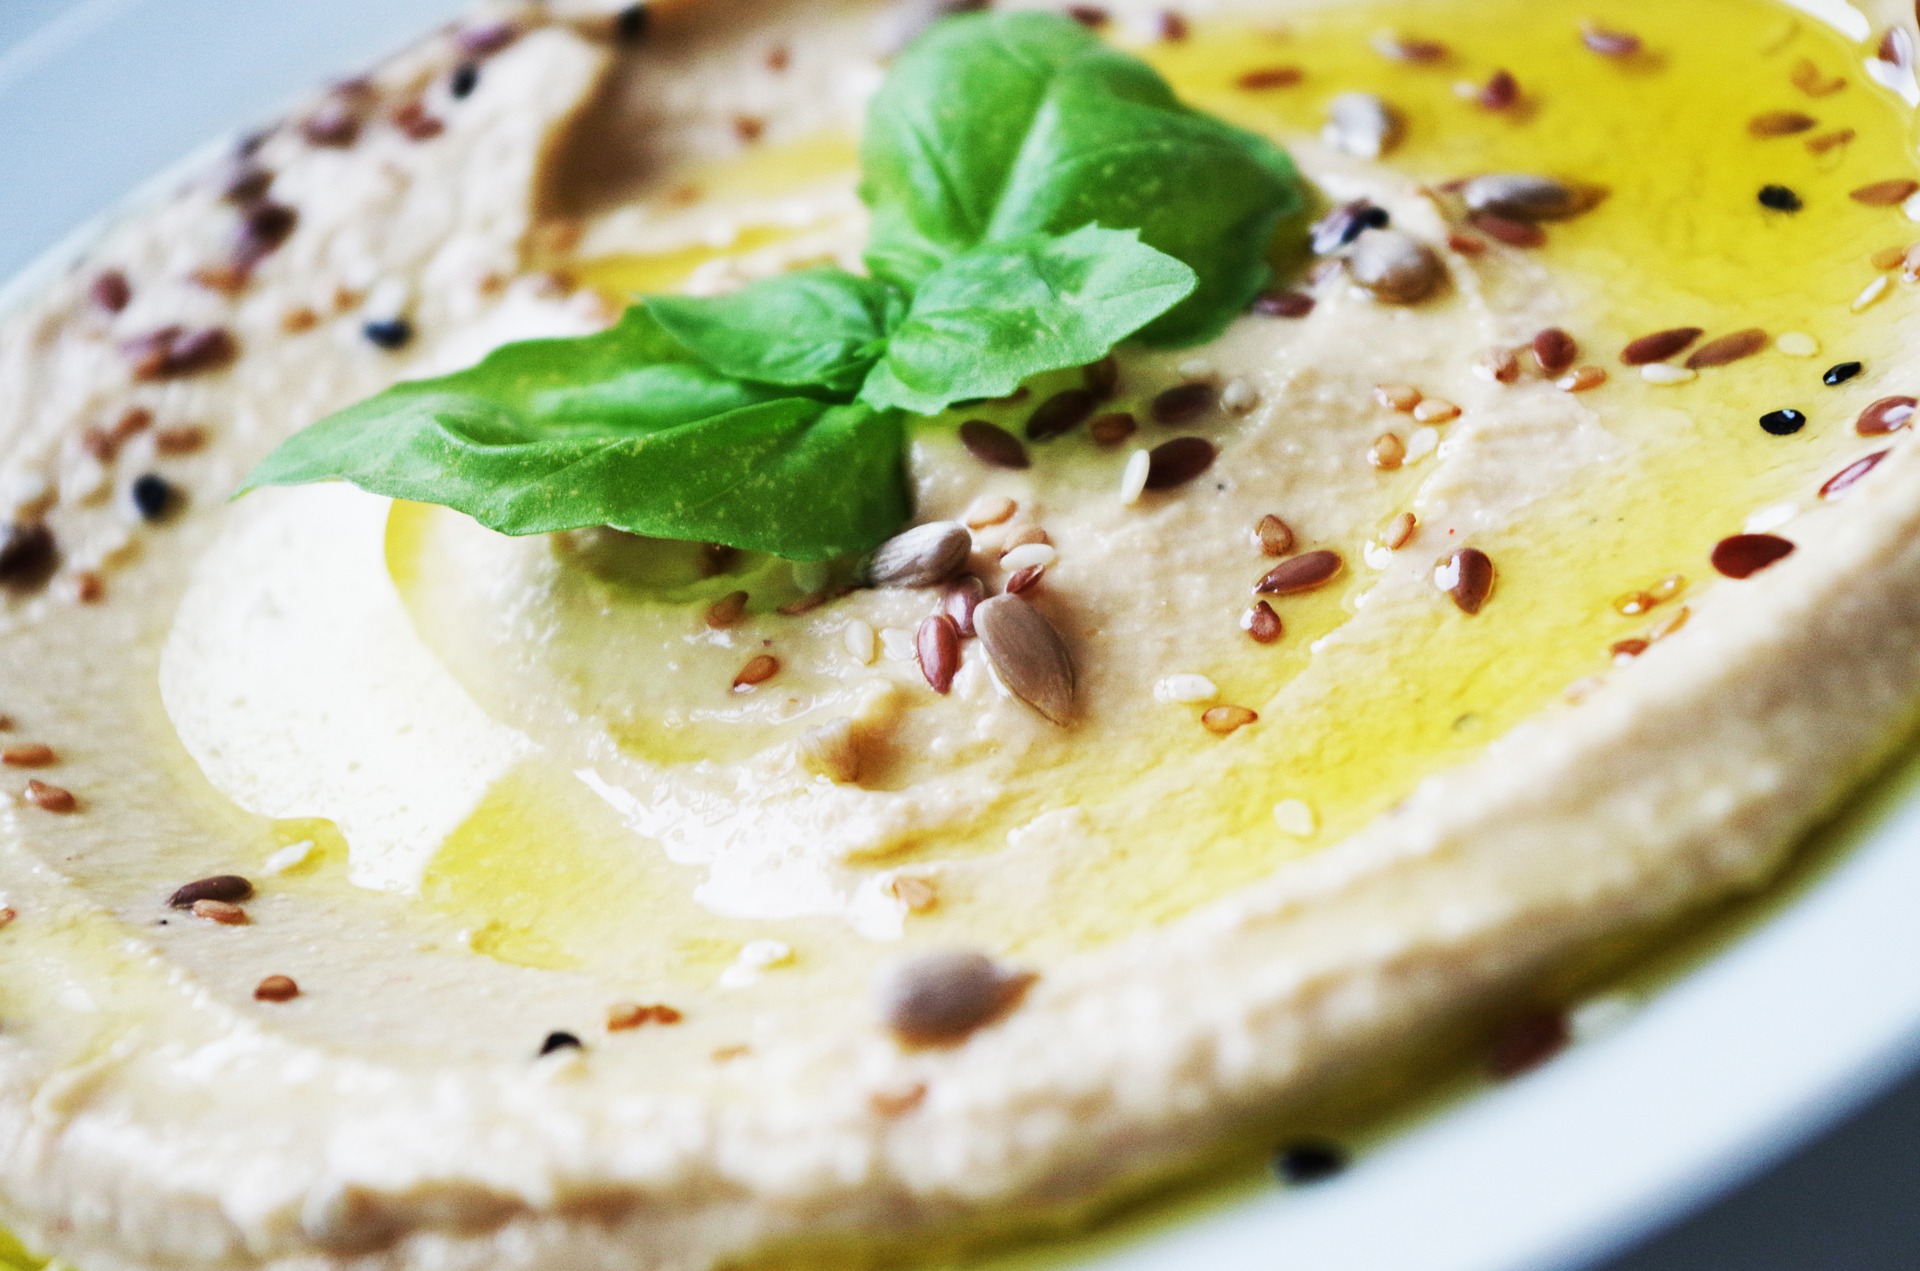 Perfekter Hummus in 5 Minuten selbst gemacht - 1000haushaltstipps